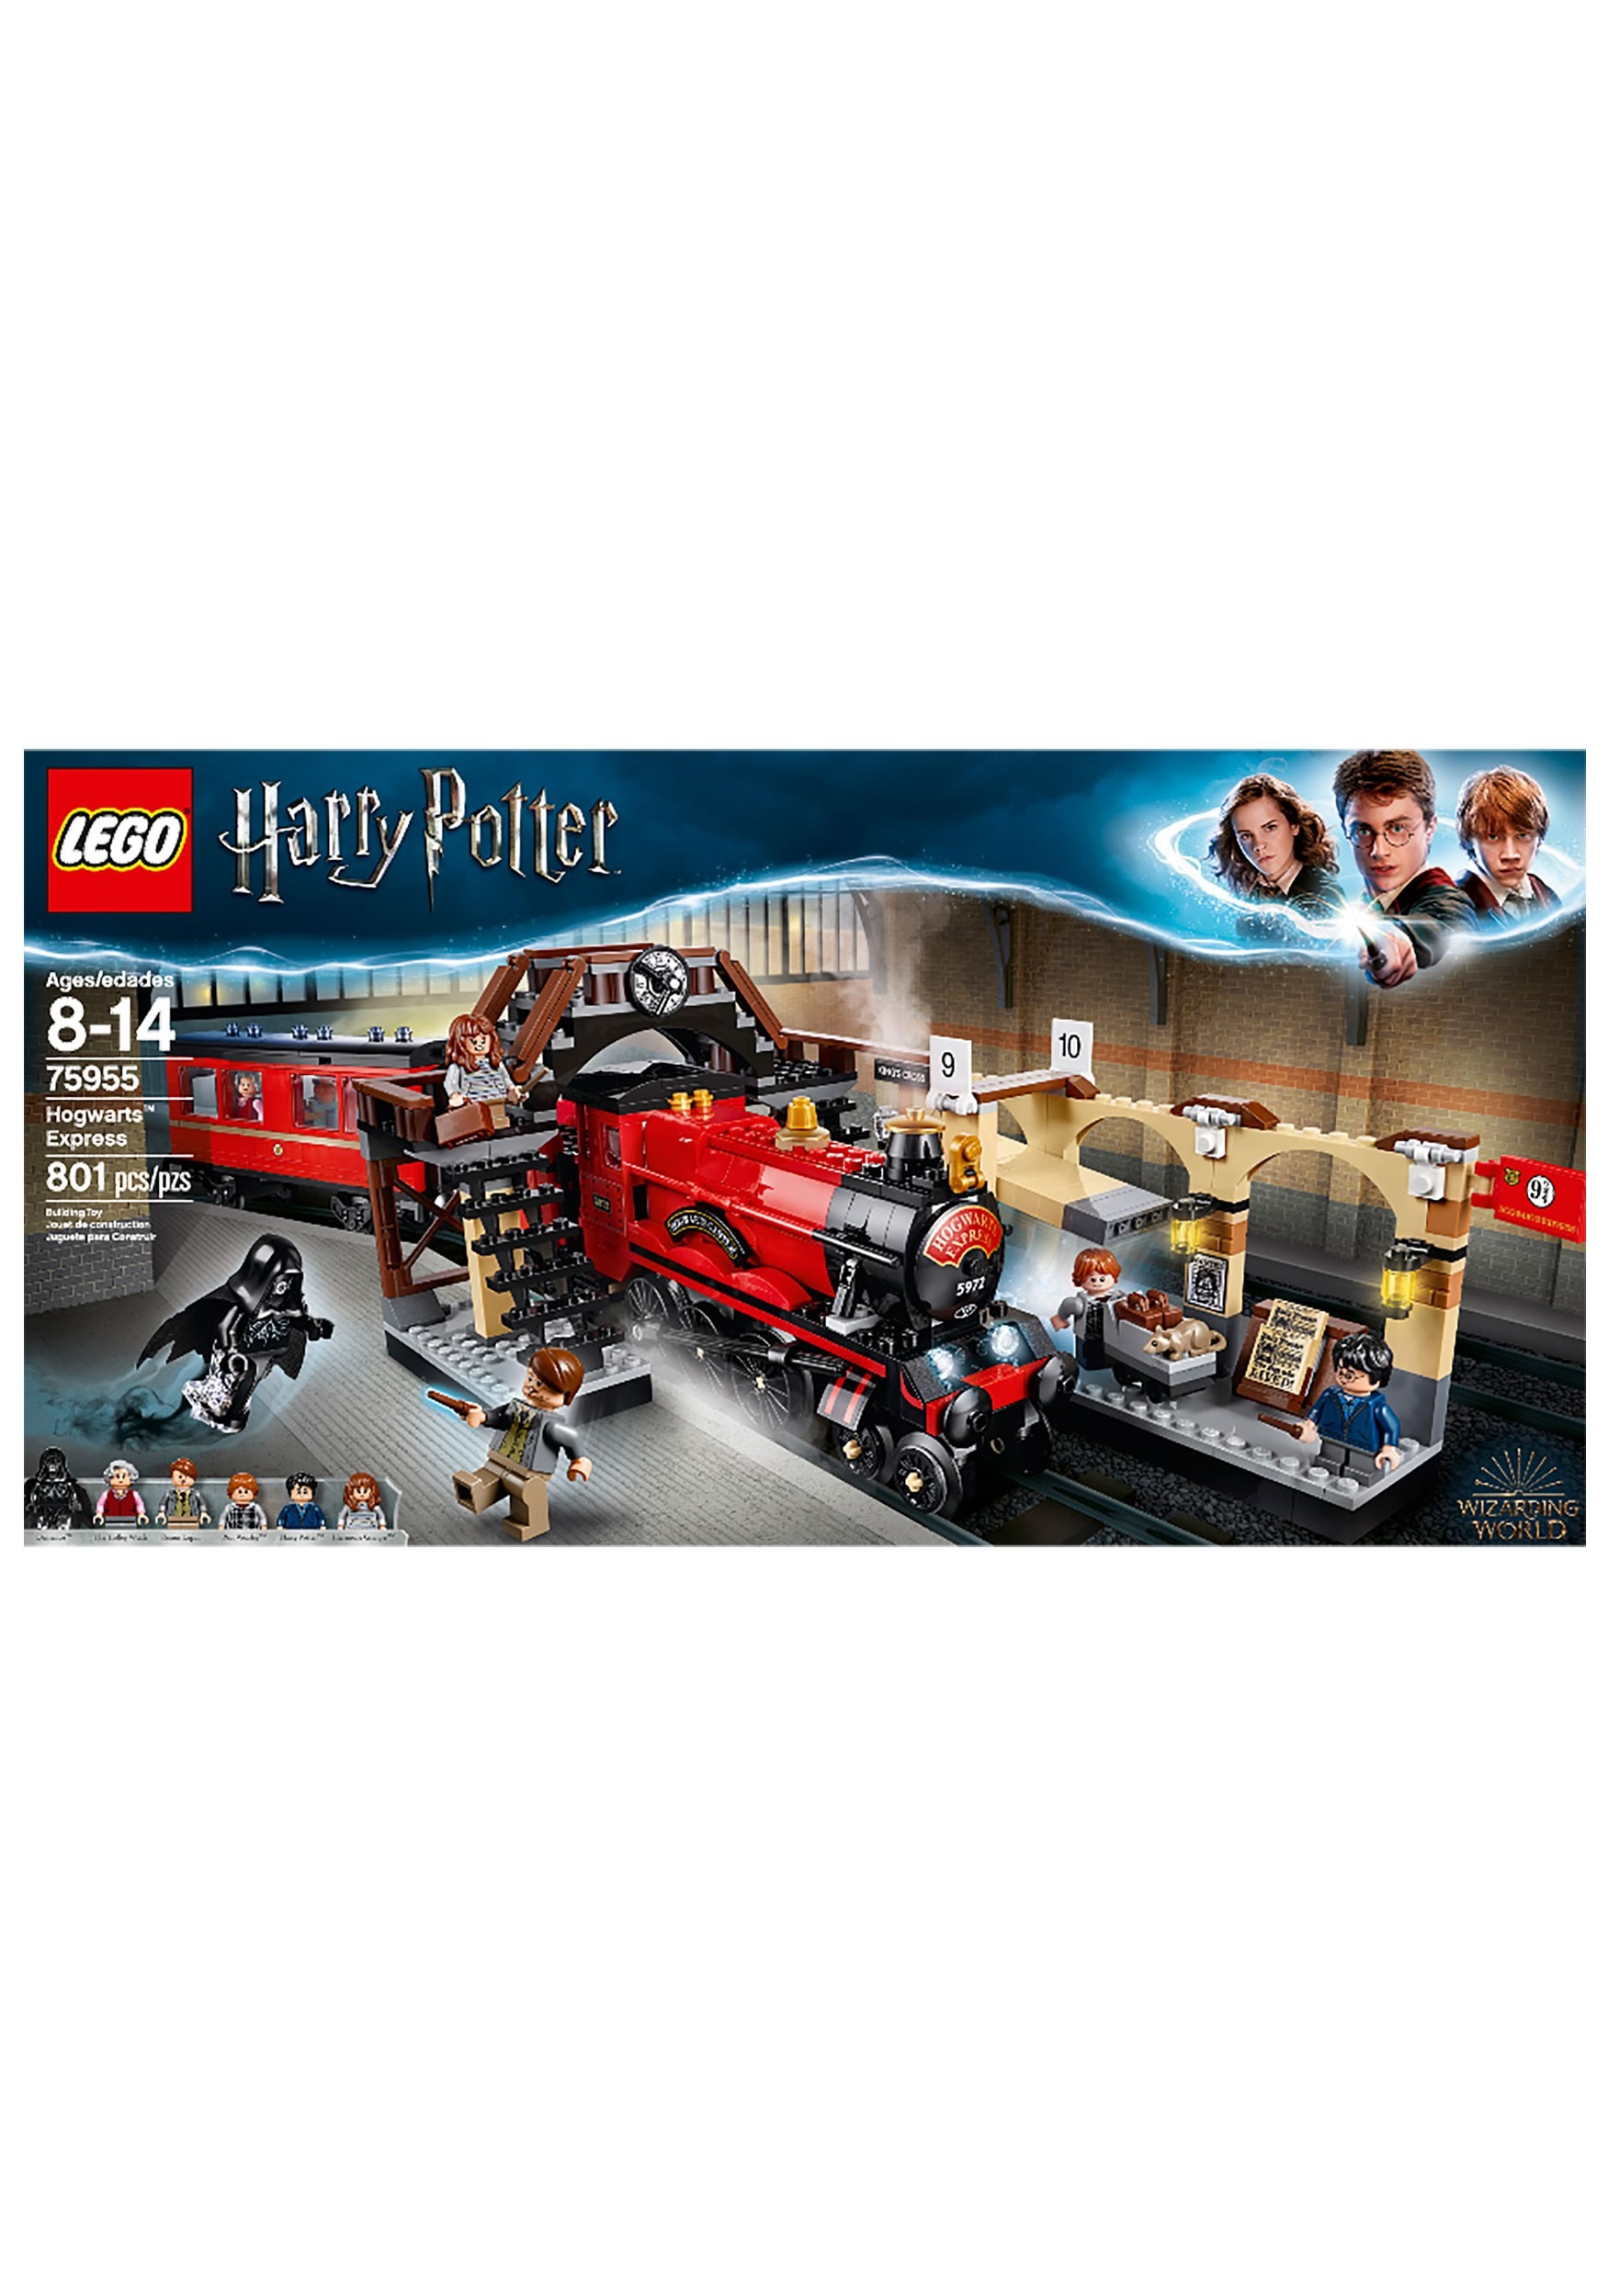 LEGO Harry Potter Hogwarts Express Set